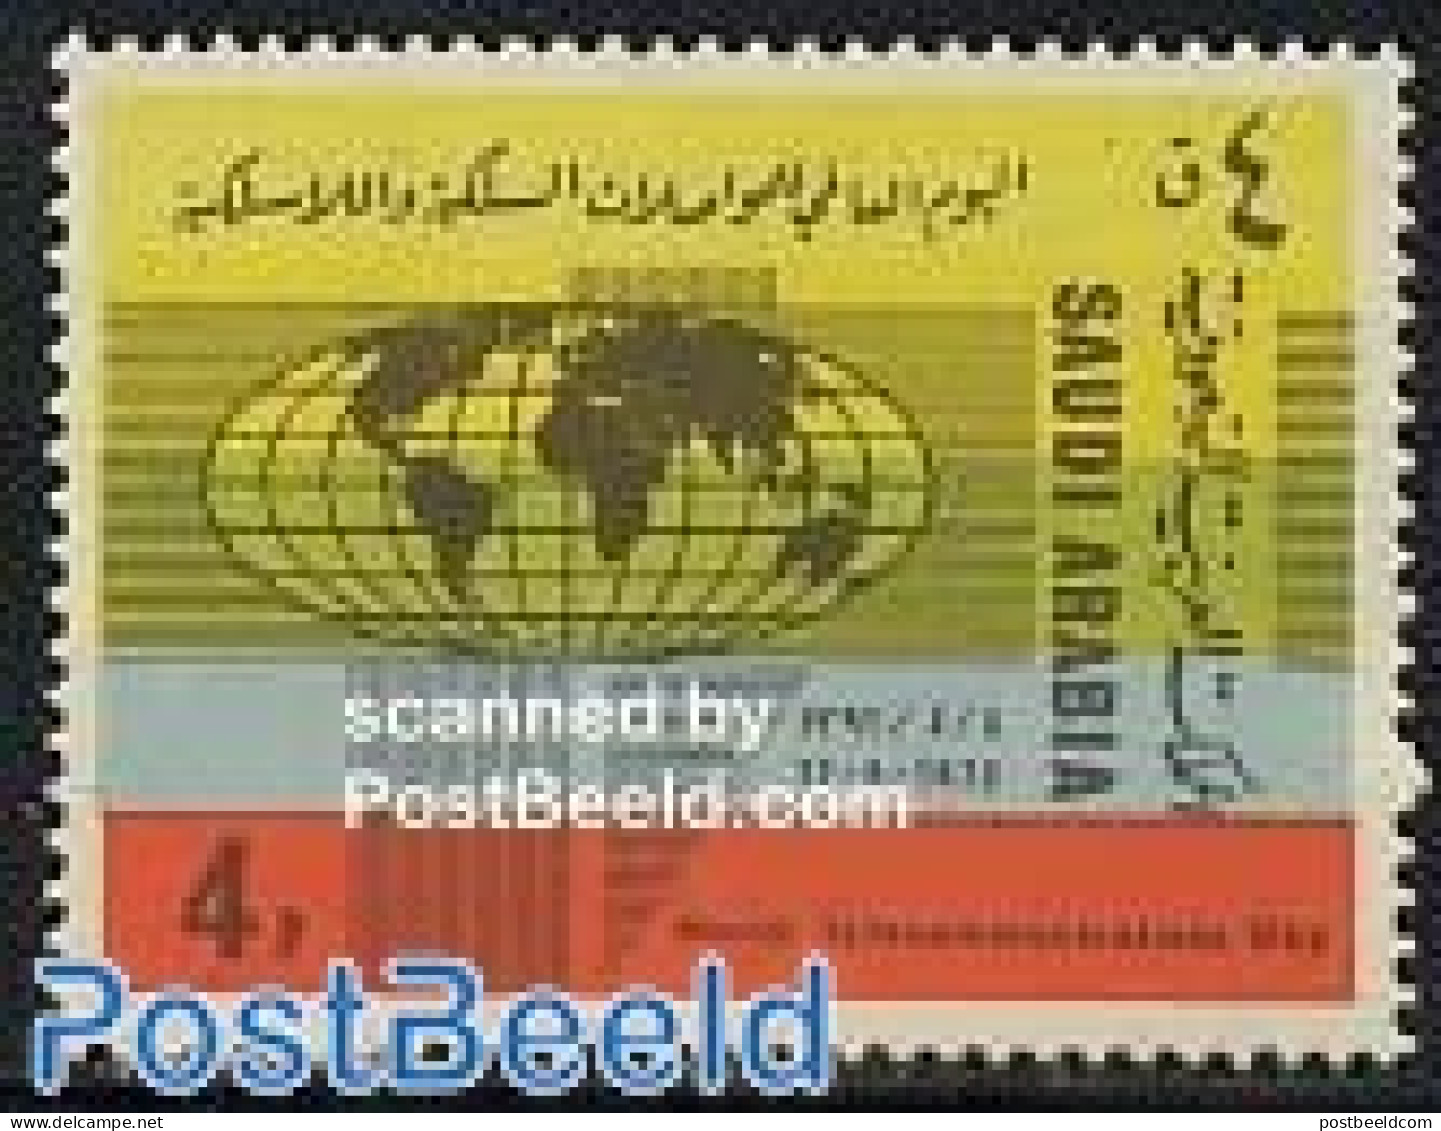 Saudi Arabia 1972 World Telecommunication Day 1v, Mint NH, Science - Various - Telecommunication - Maps - Télécom